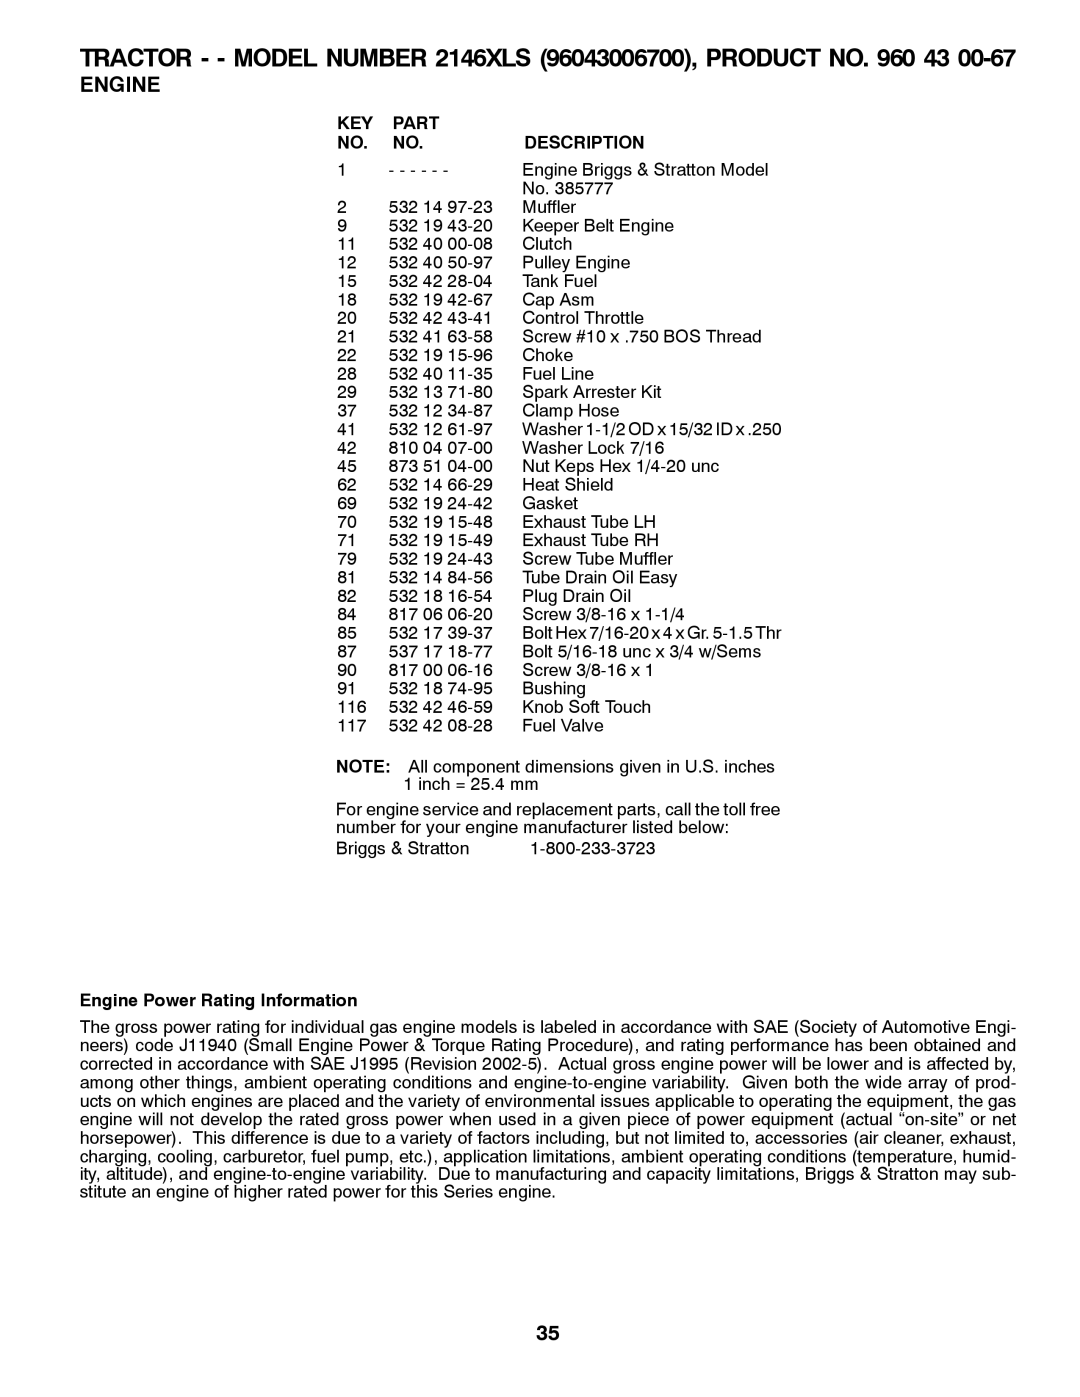 Husqvarna 2146XLS owner manual Part, Description, Engine Power Rating Information 